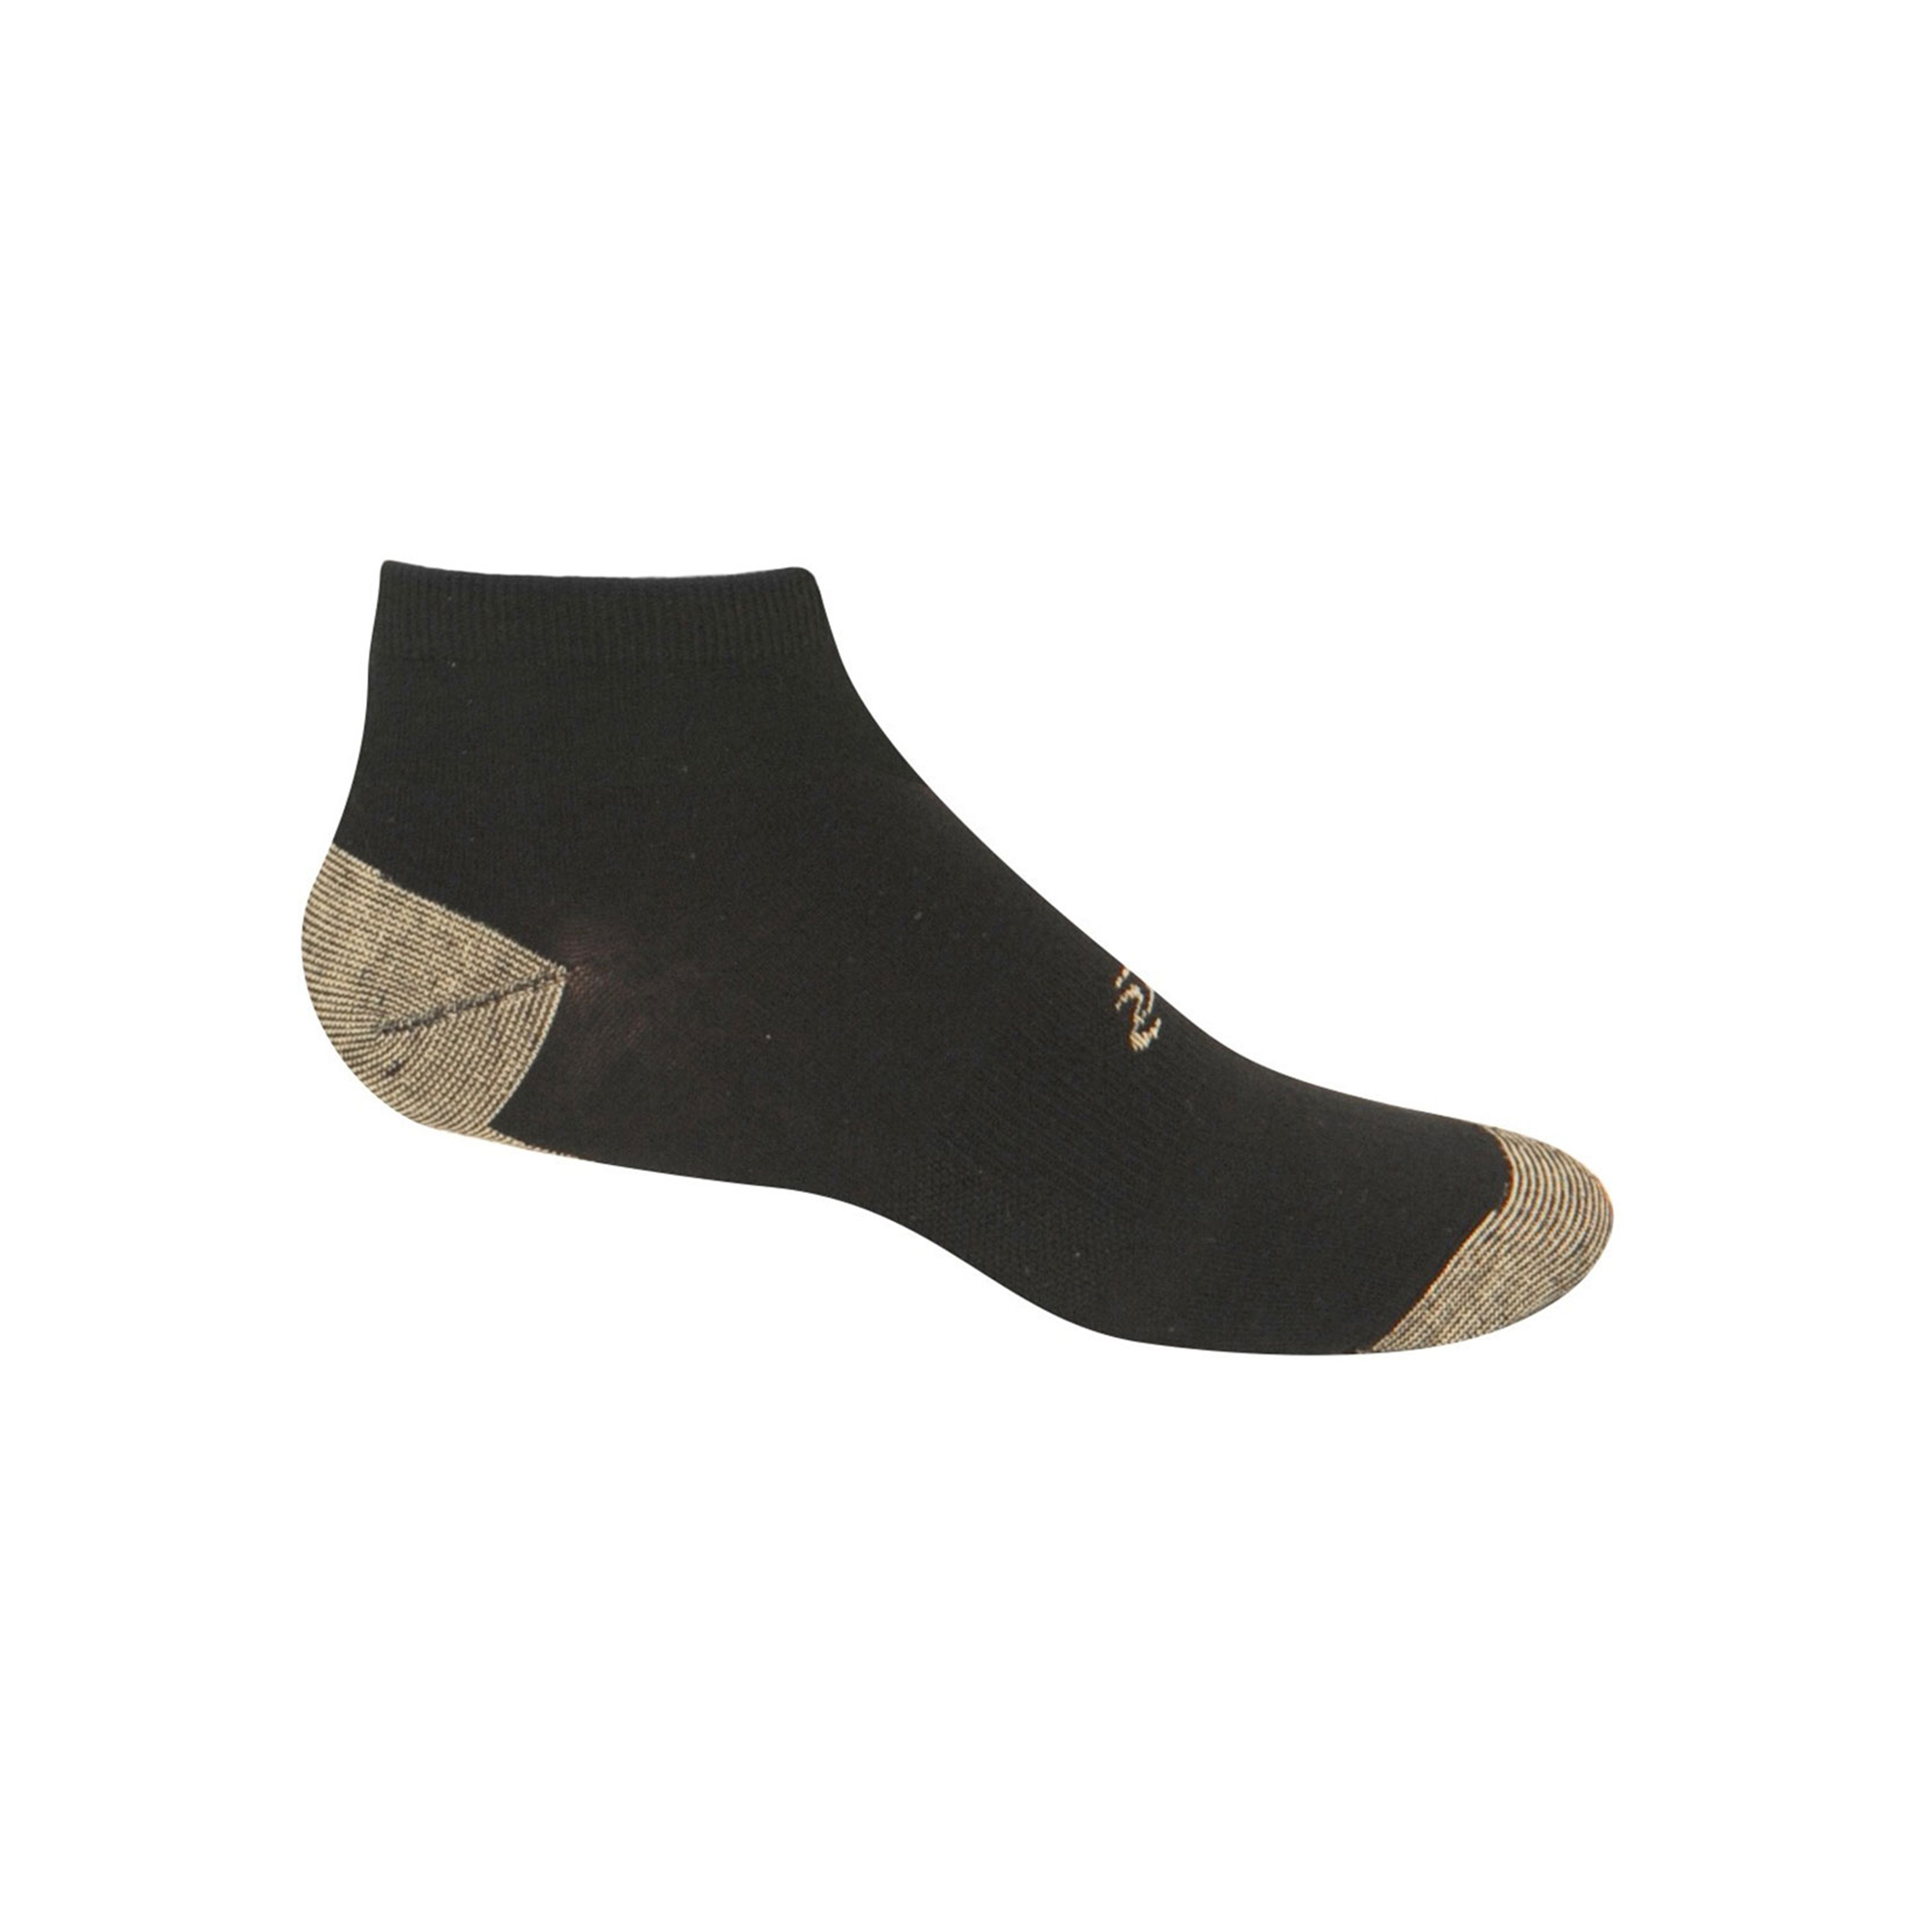 Copper Sole Socks Athletic - Low Cut - Black